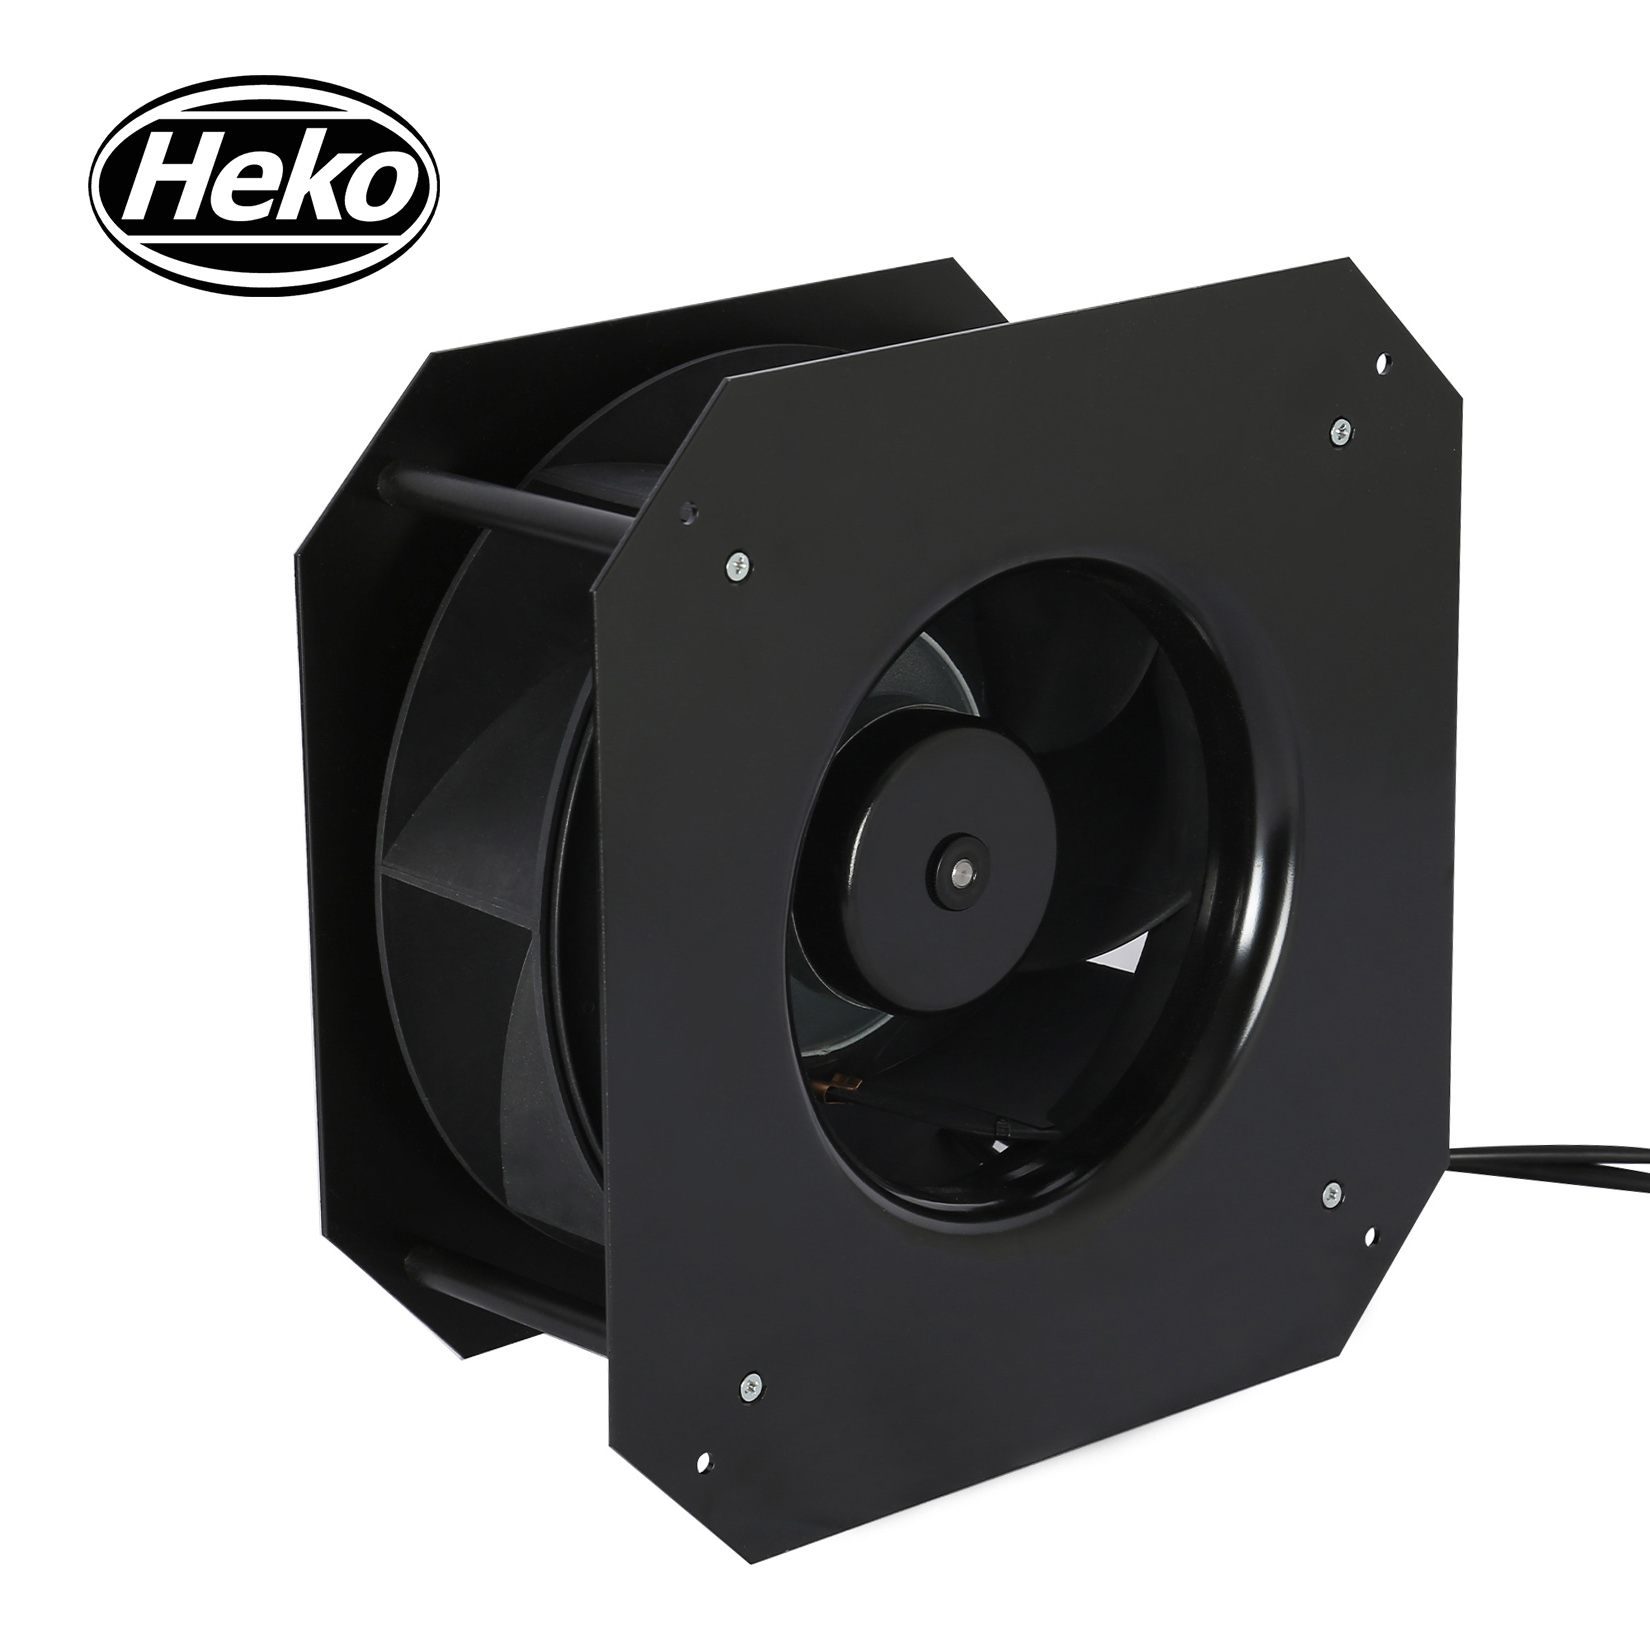 HEKO EC 225mm Push-Pull Centrifugal Suction Exhaust Fan